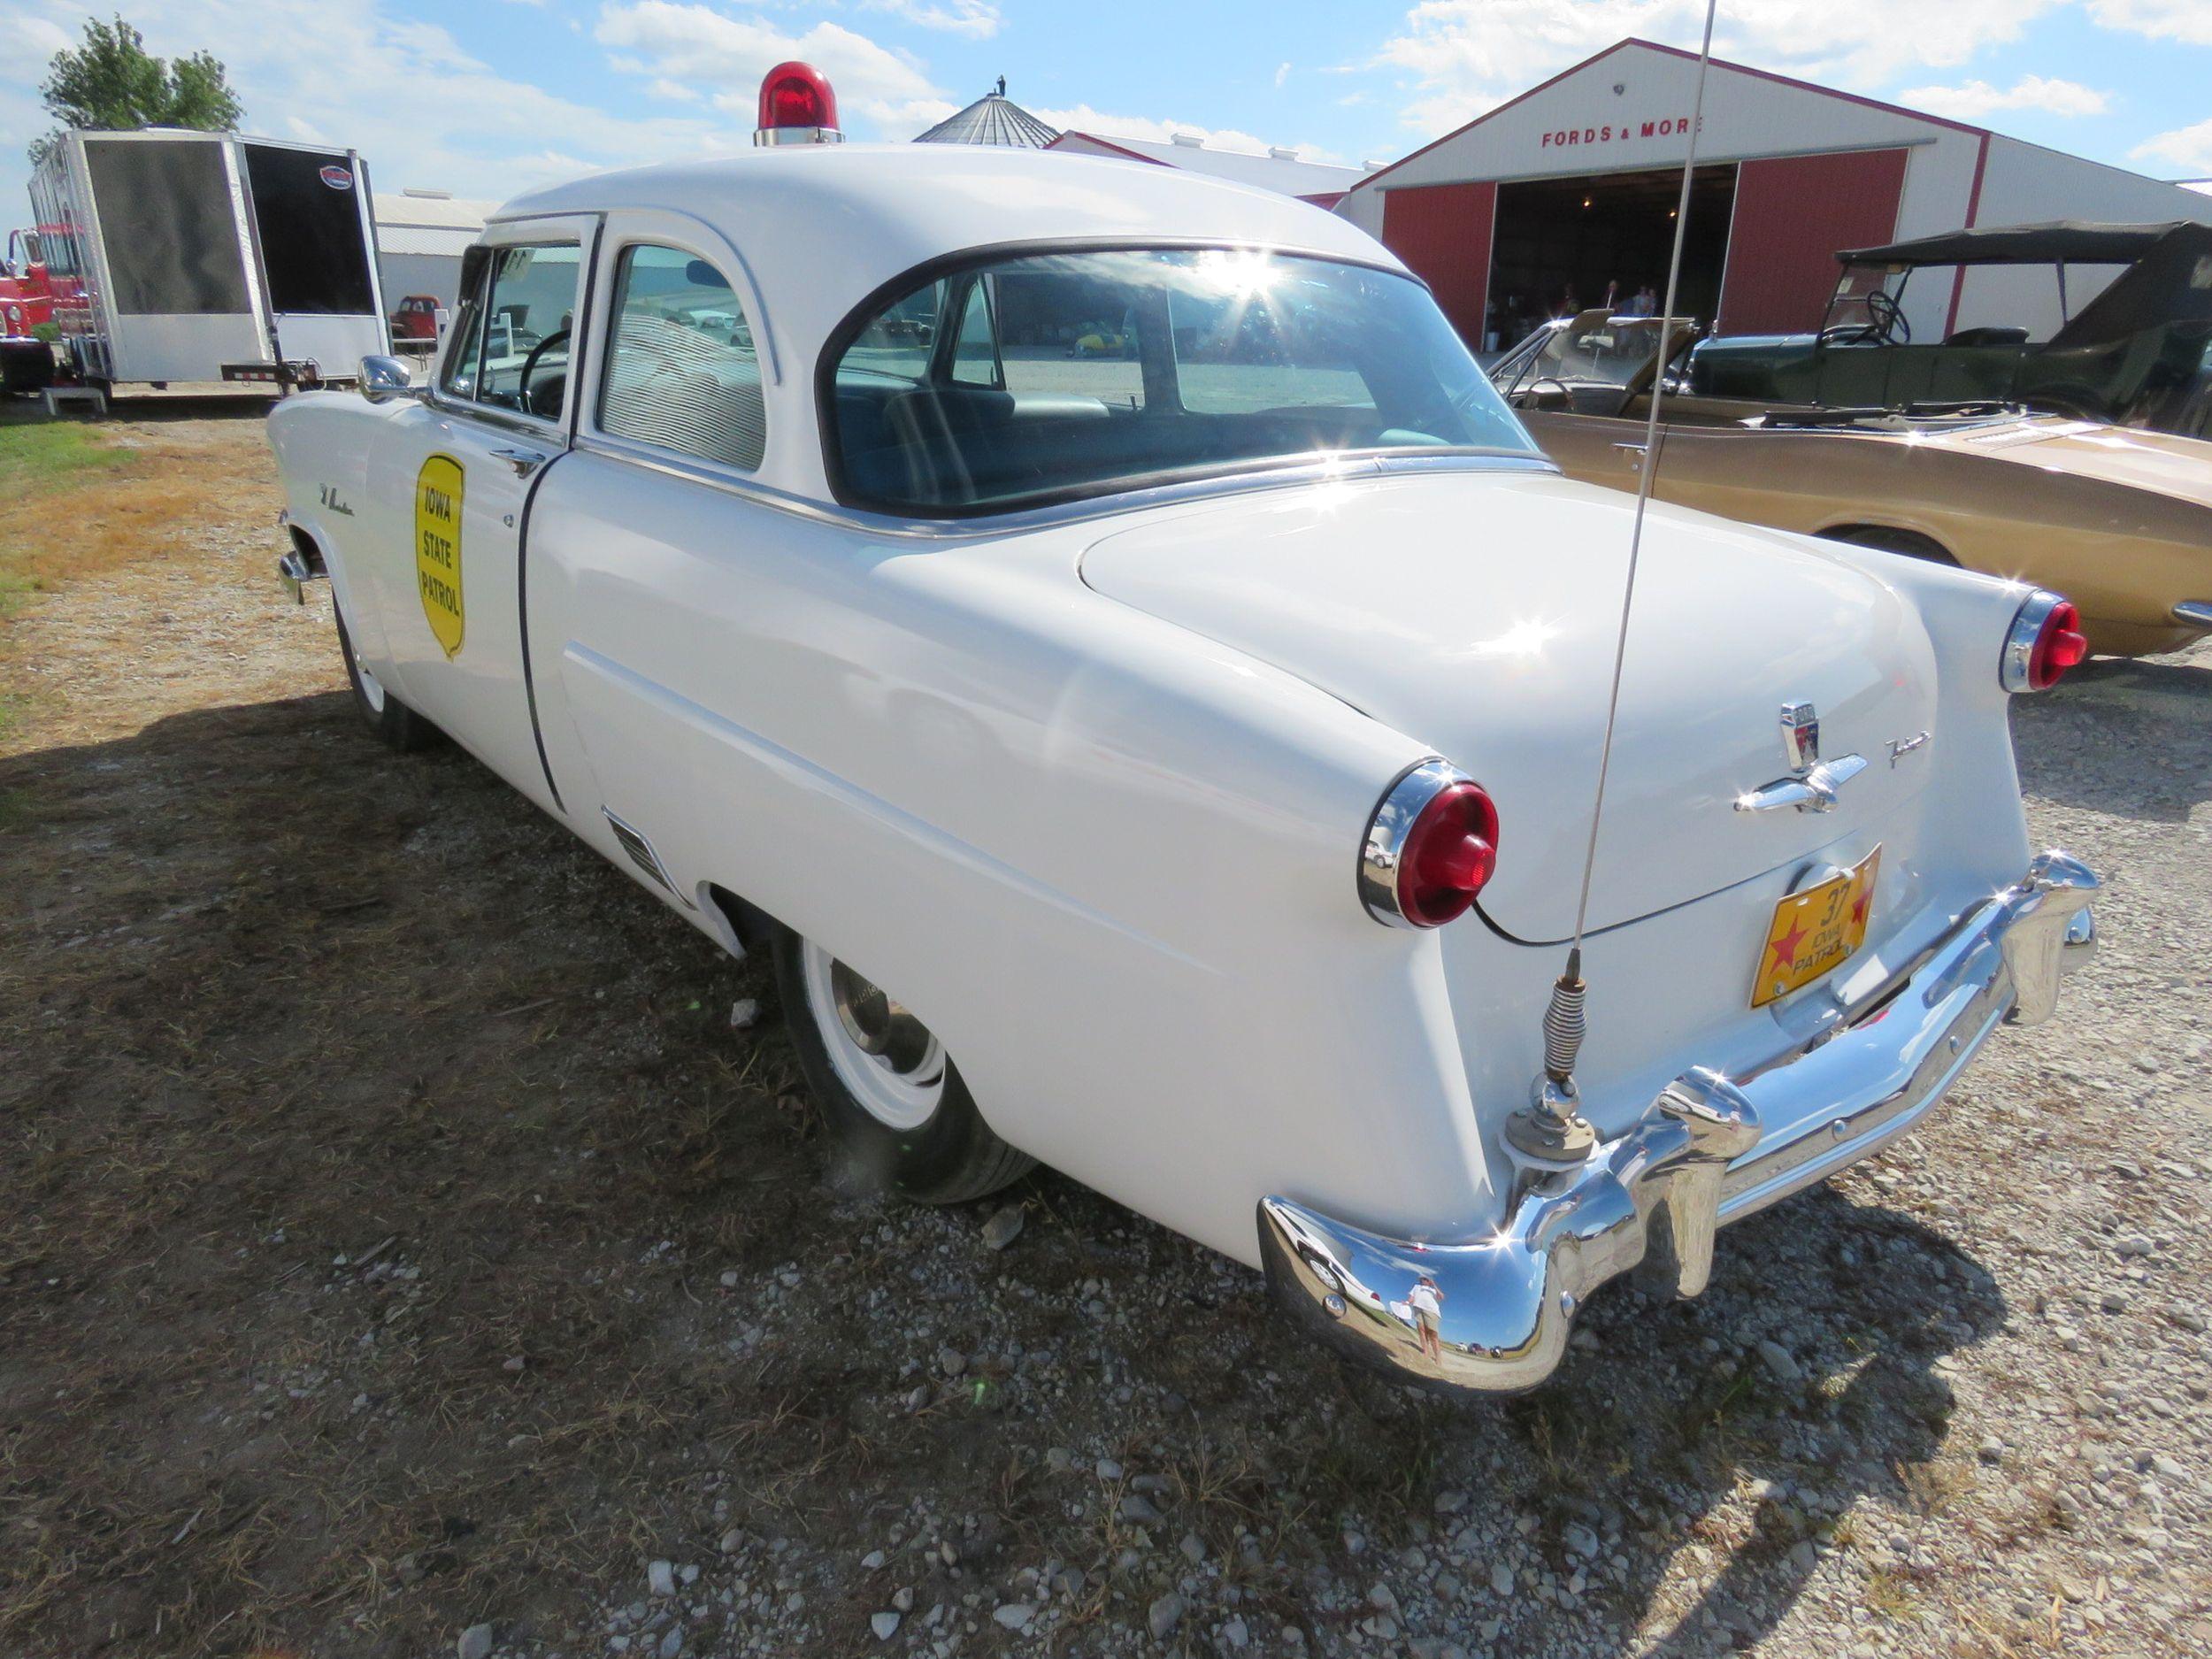 1953 Ford Mainline Iowa Patrol Car